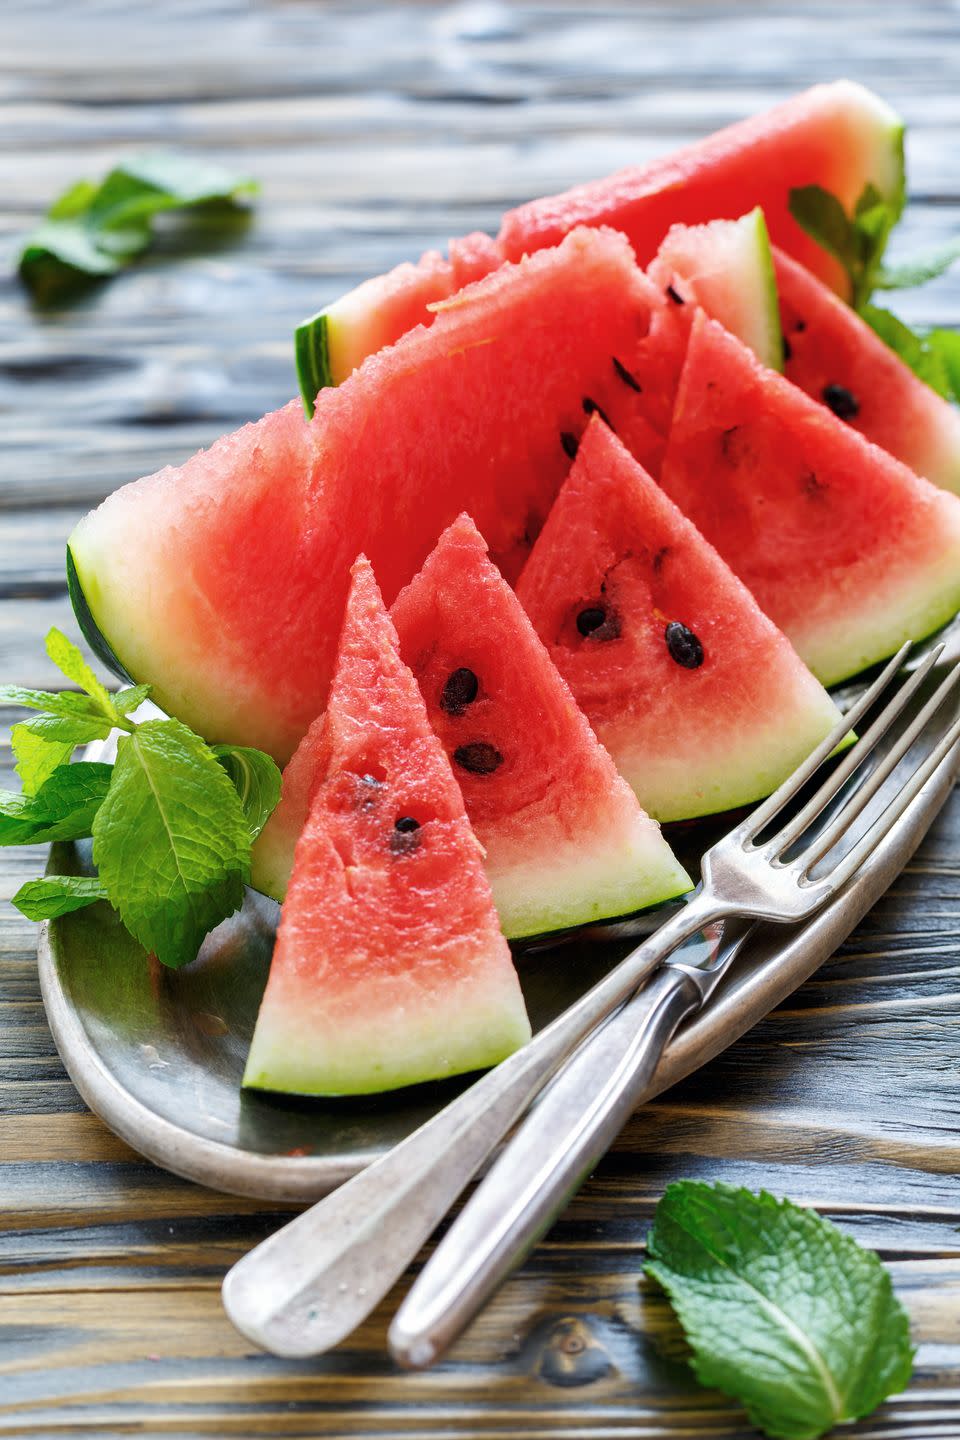 2) Watermelon